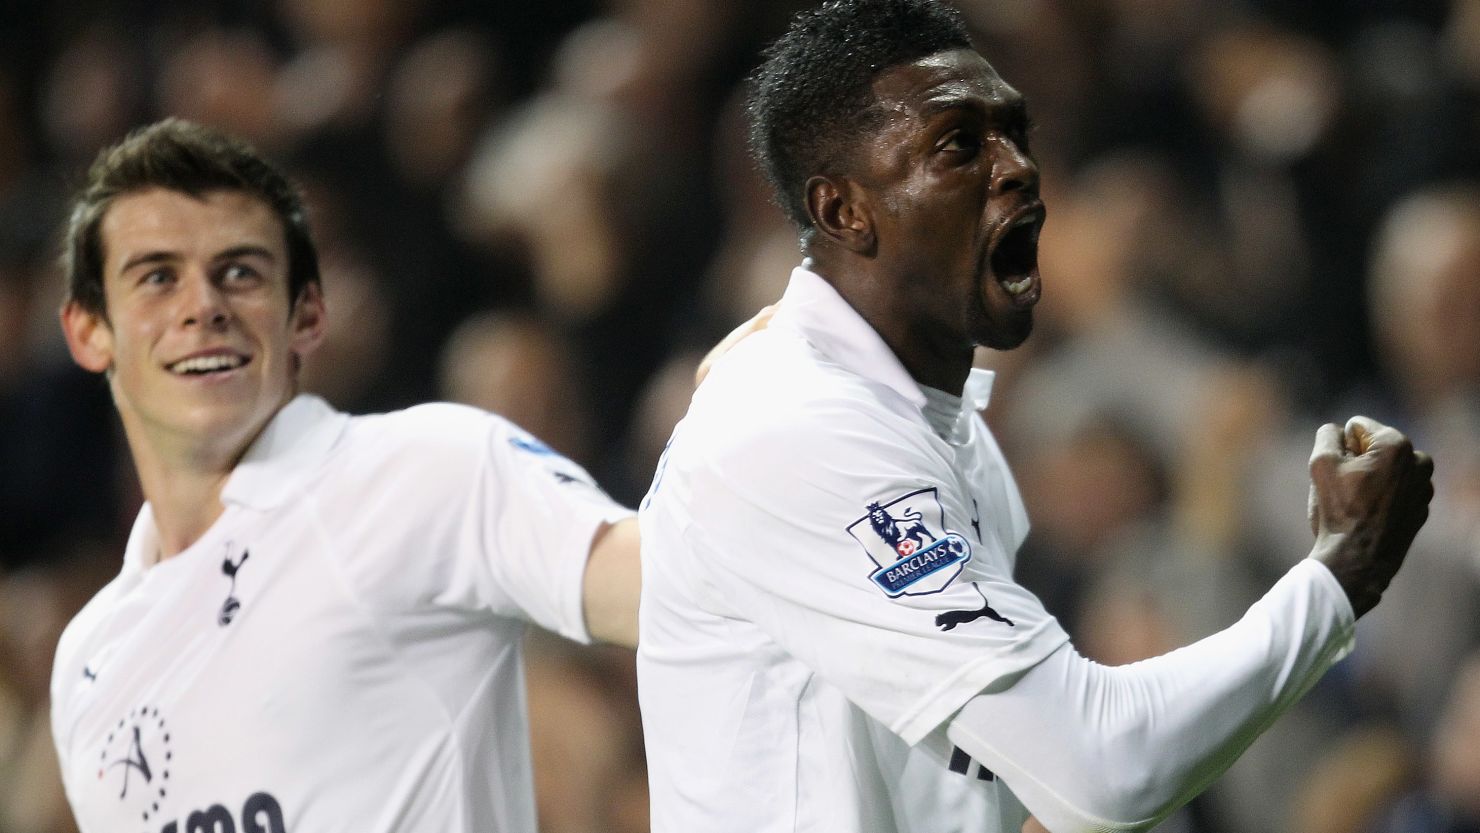 Emmanuel Adebayor celebrates scoring for Tottenham while on loan at the London club last season.